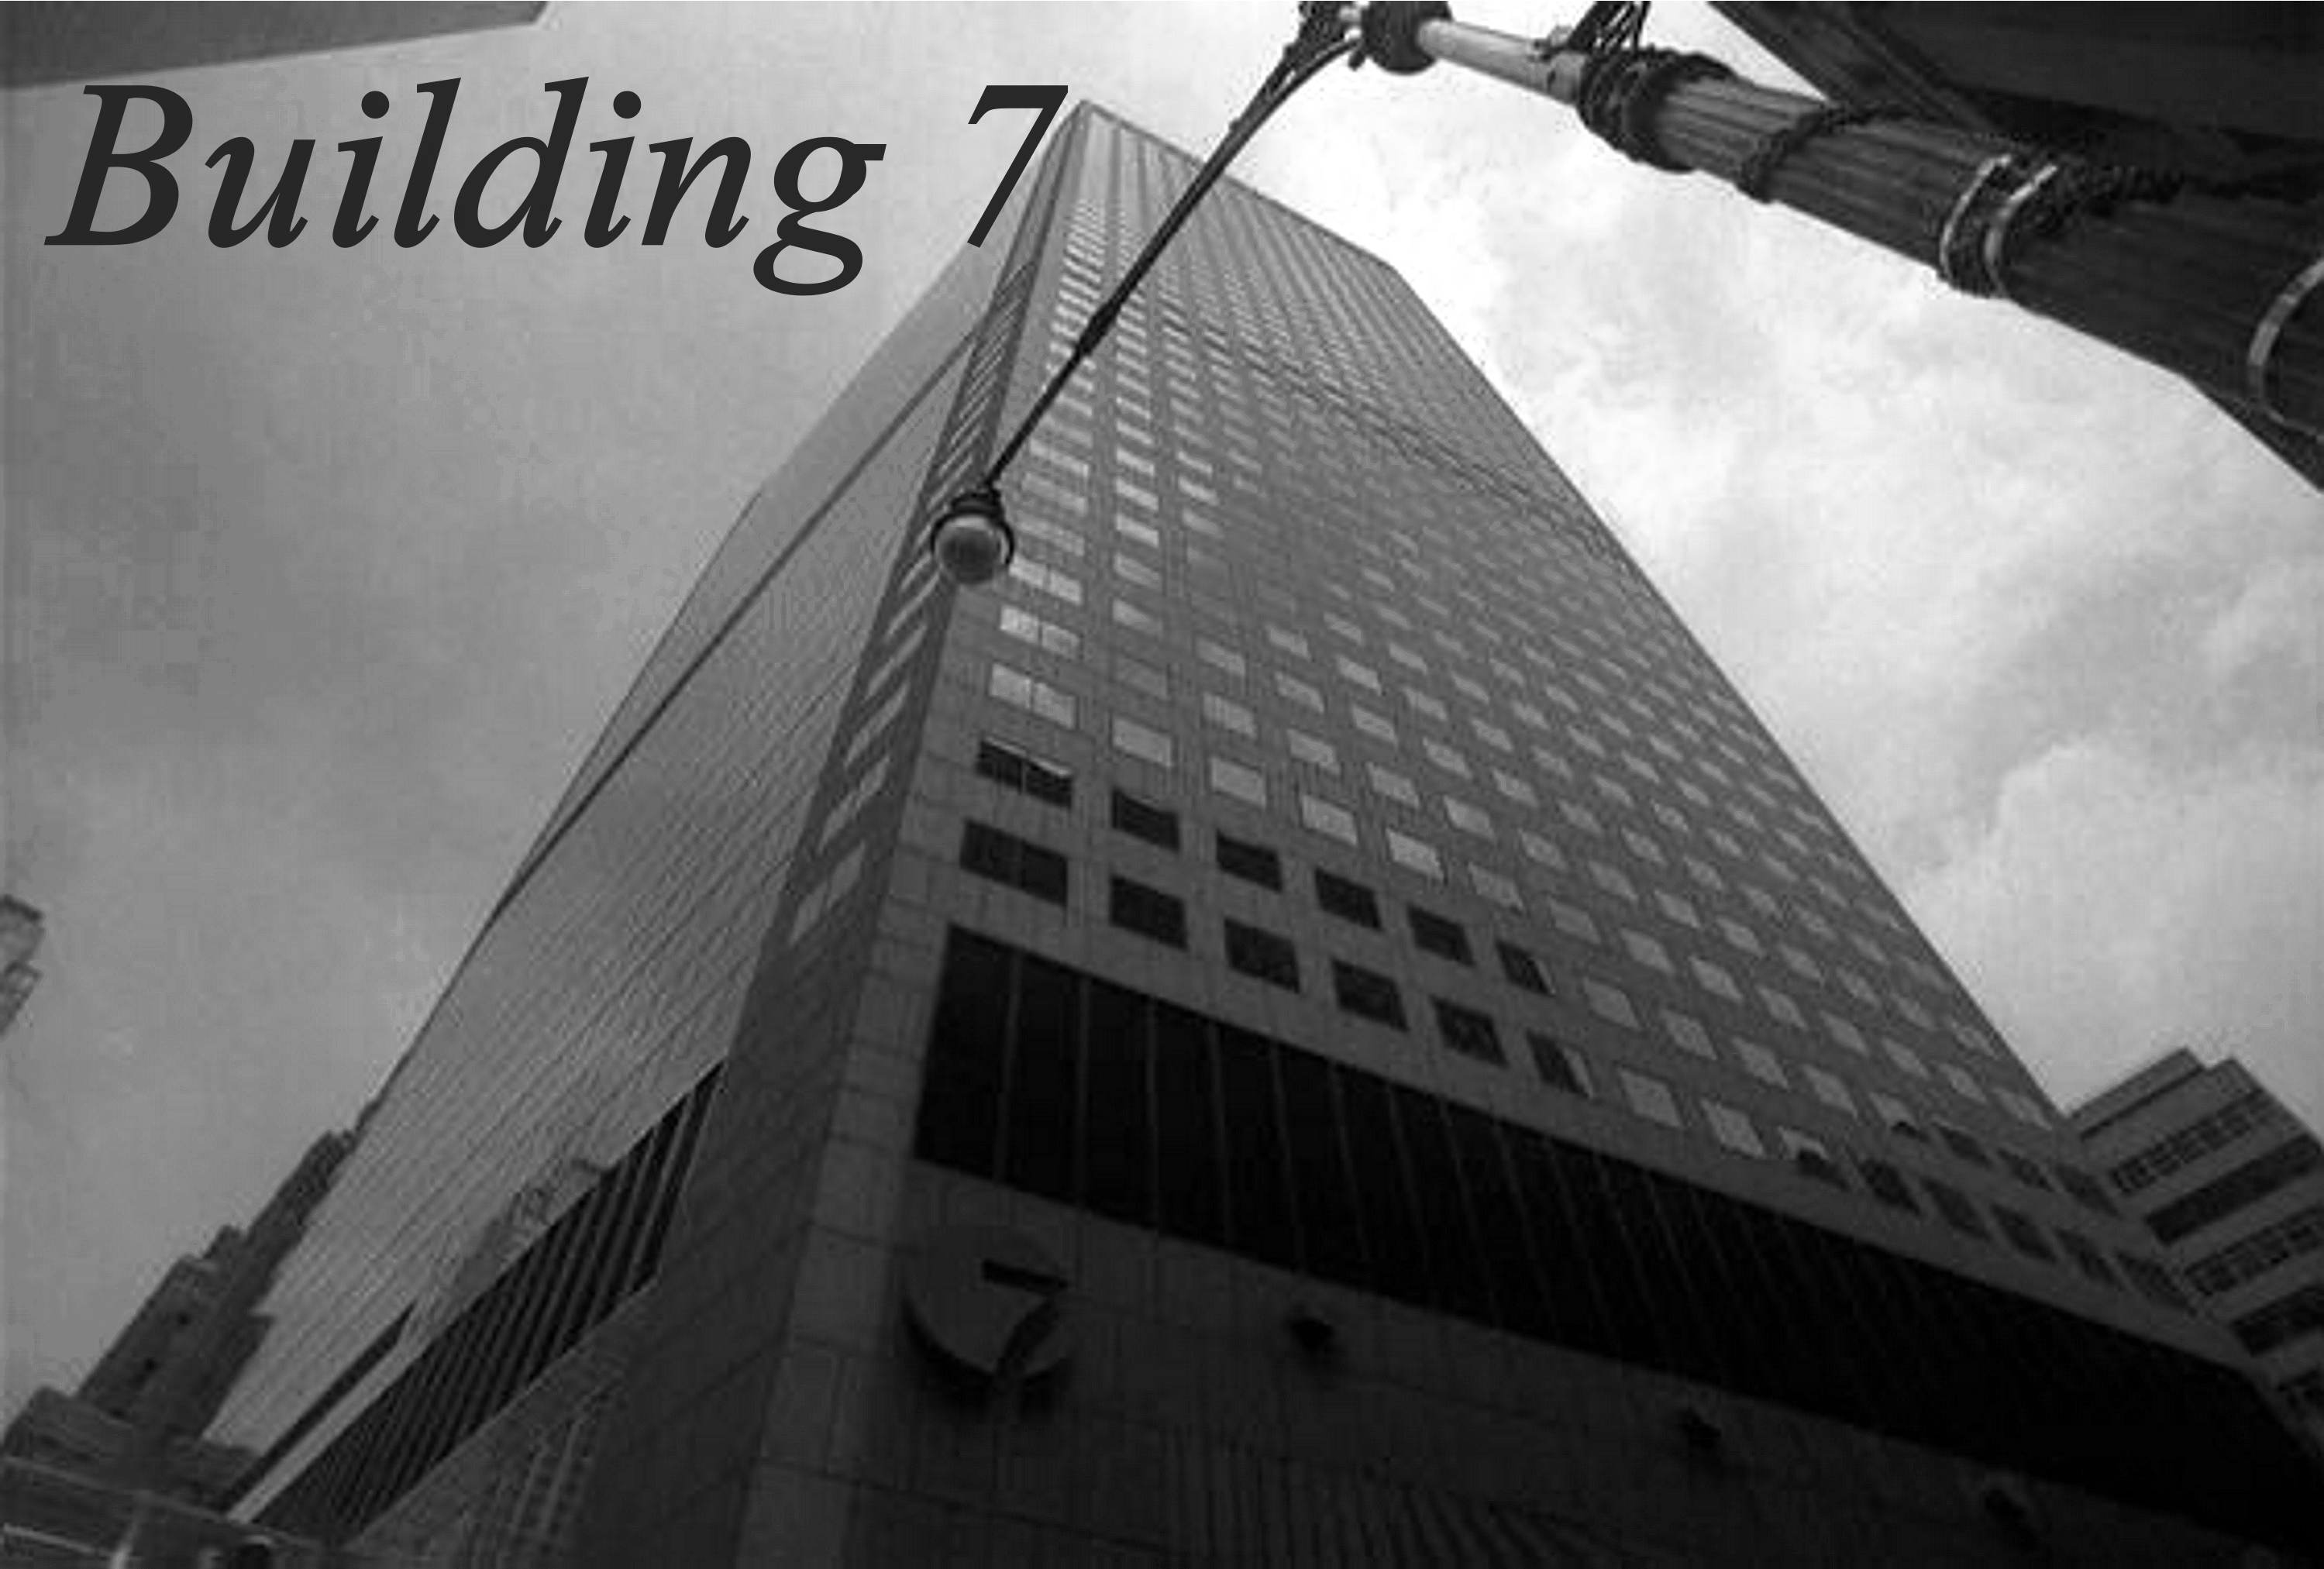 Building 7